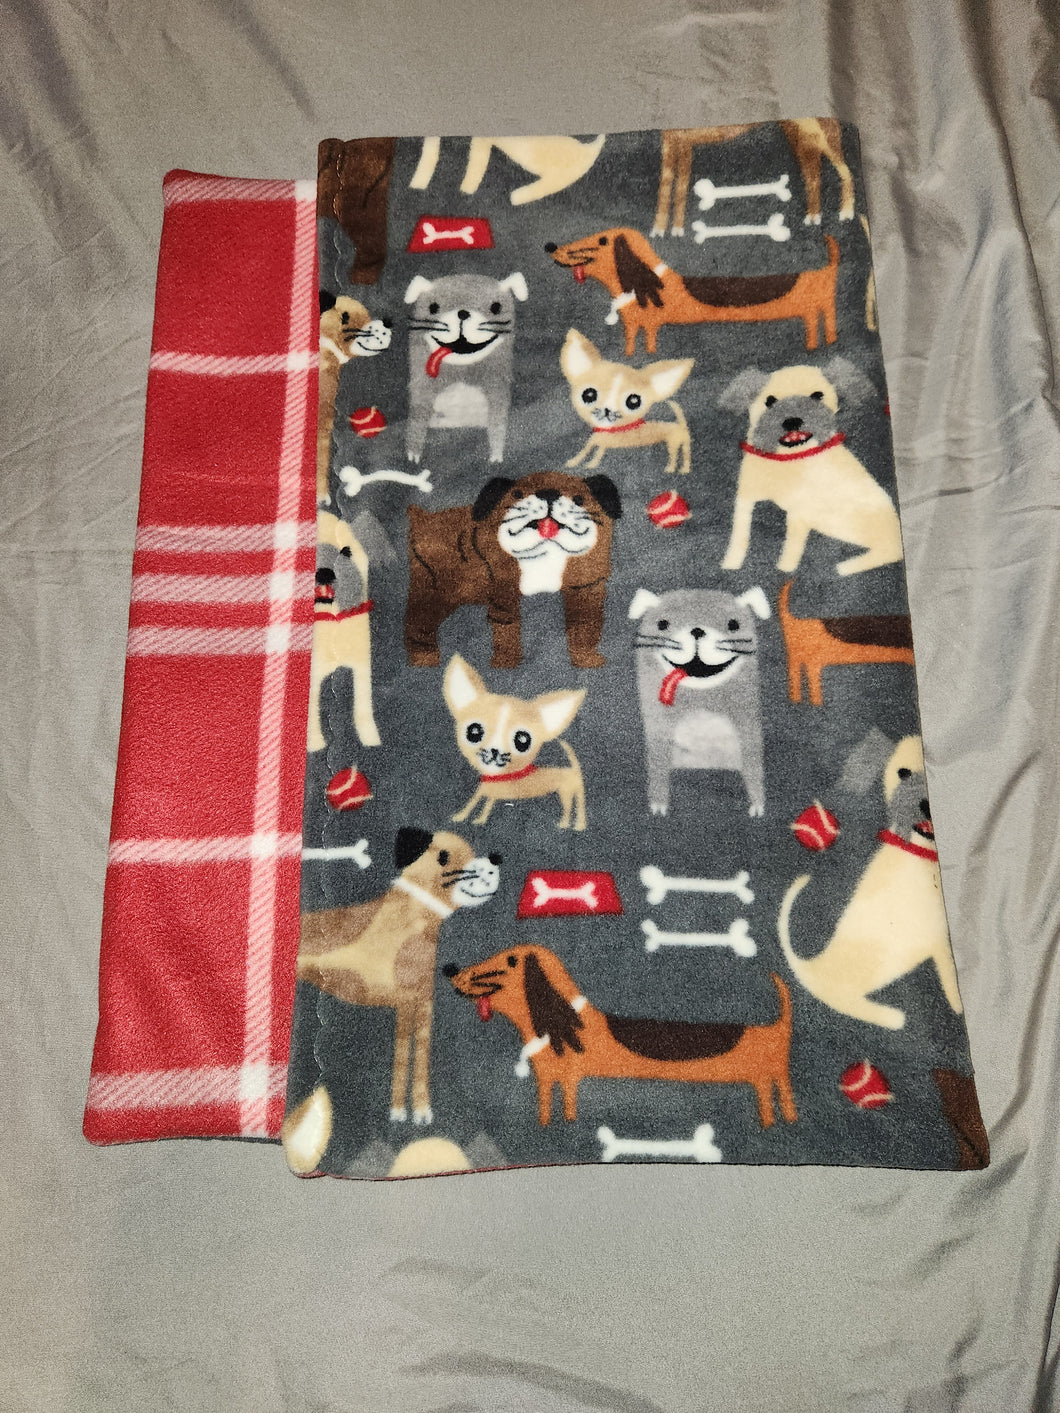 Pillowcase - Dog, Tan Brown & Grey on Grey Fleece::Plaid, Red and White Fleece